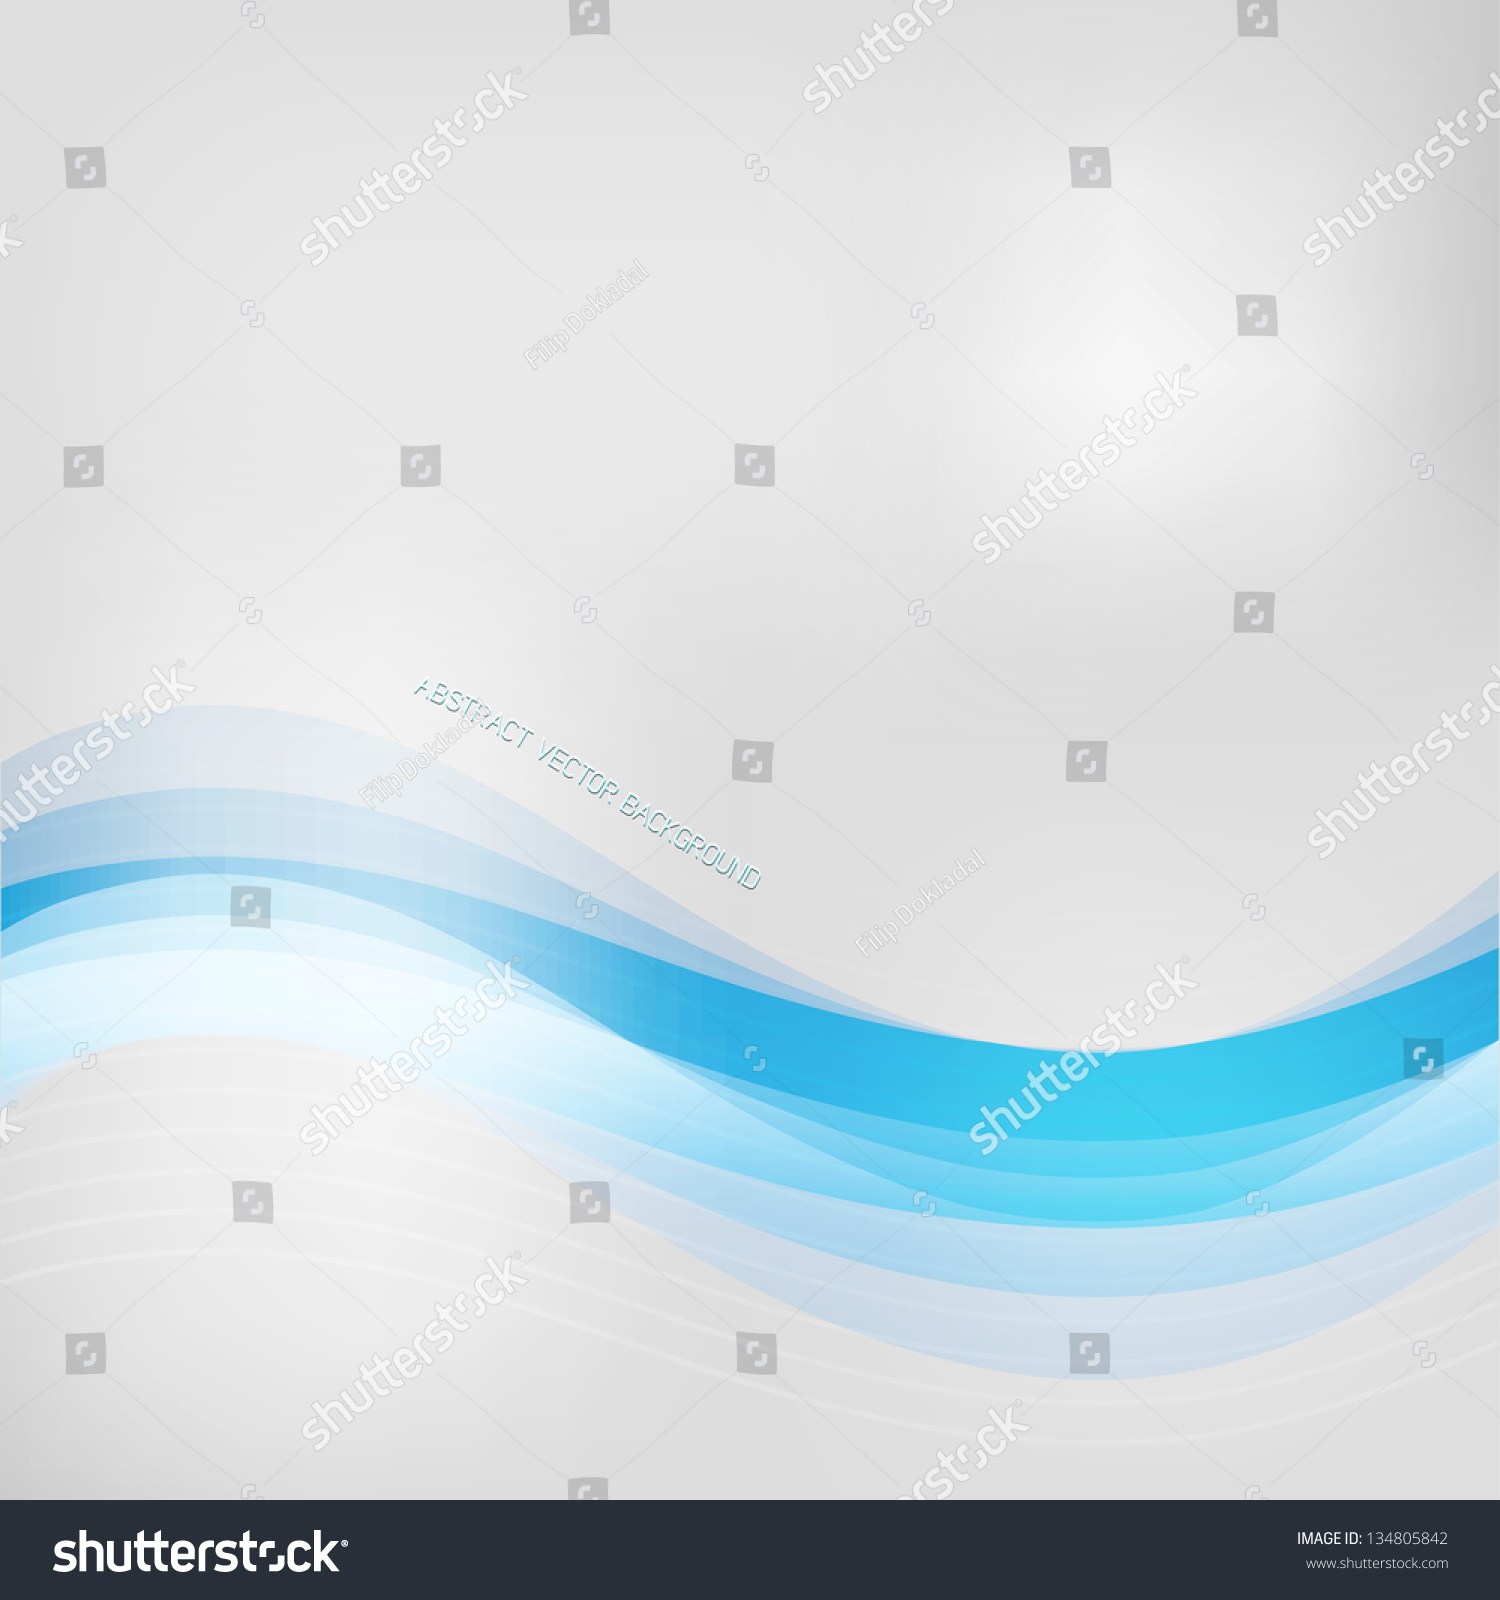 Abstract Blur Blue Vector Background - 134805842 : Shutterstock